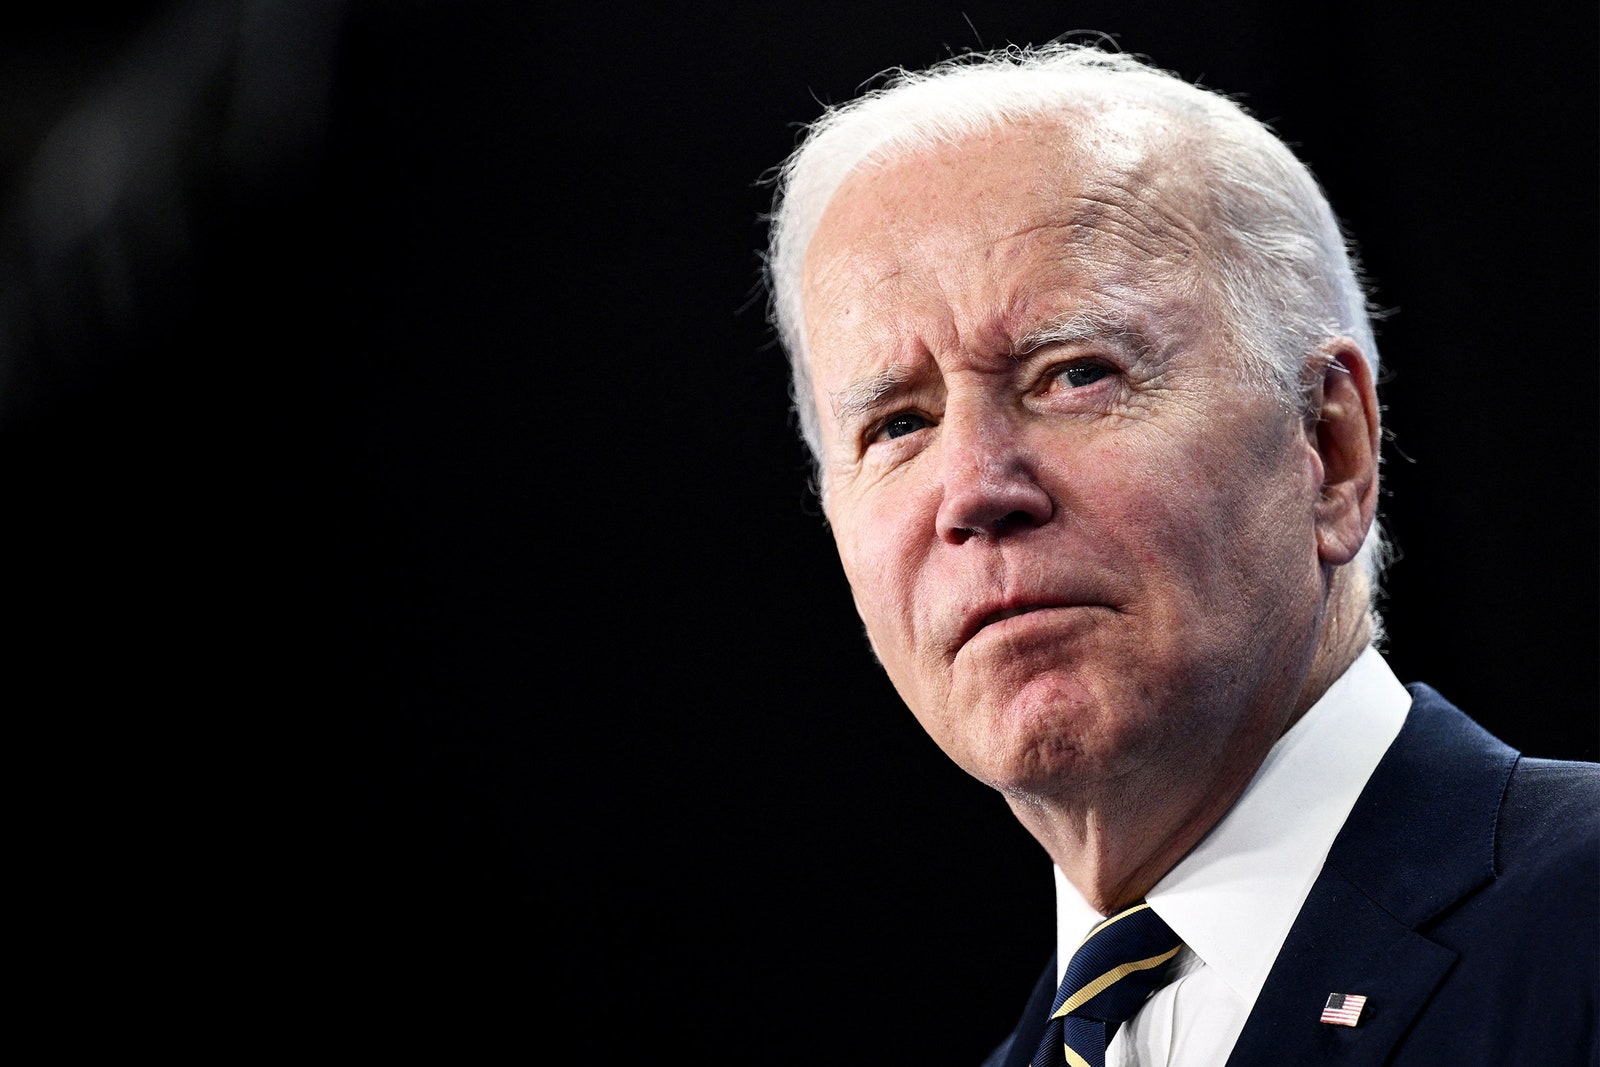 Joe Biden Wants US Government Algorithms Tested for Potential Harm Against Citizens